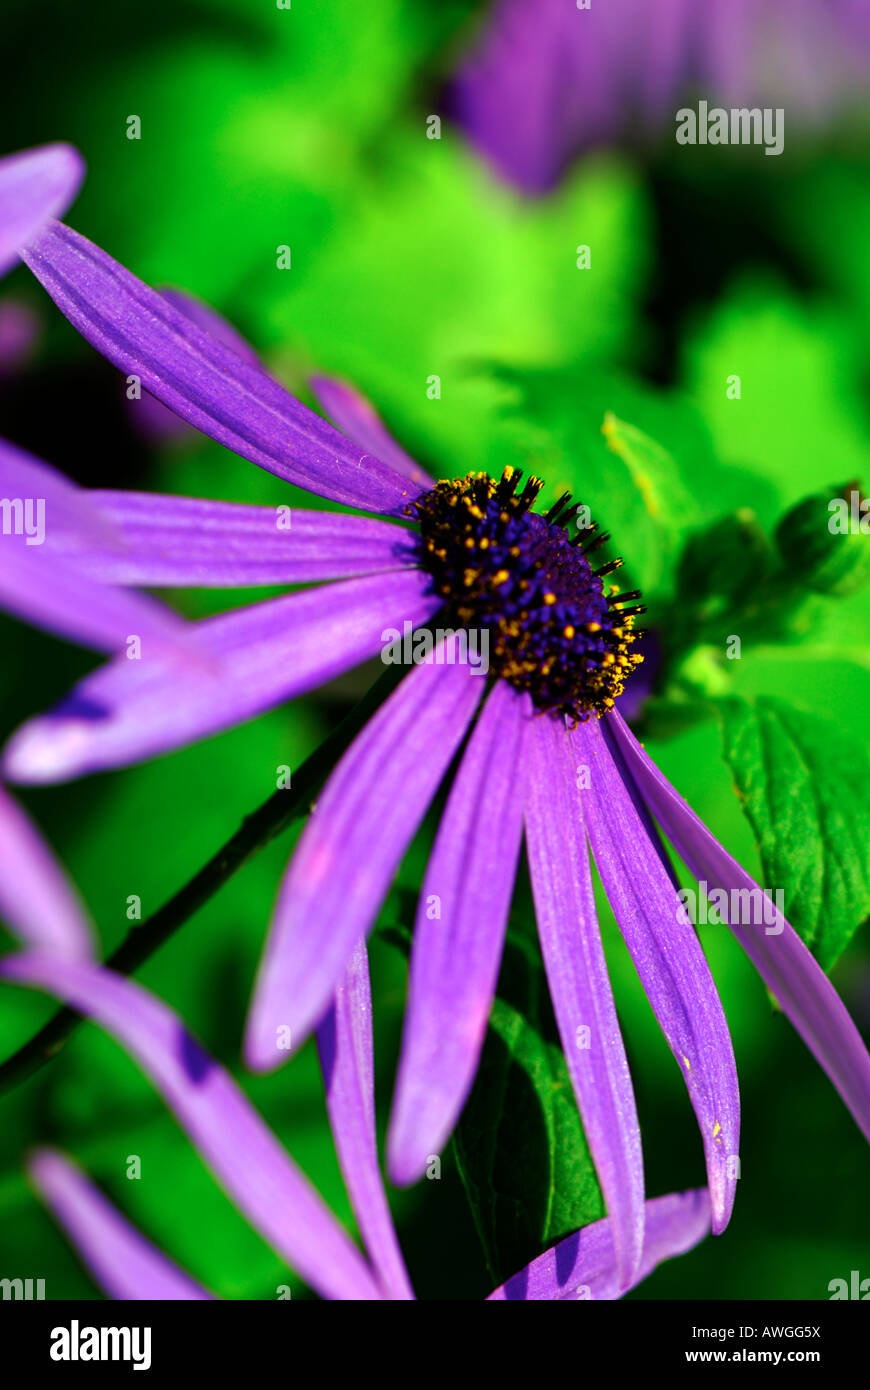 Blue/purple daisy-like flower of the brachyglottis hectoris plant, part of the aster family Stock Photo